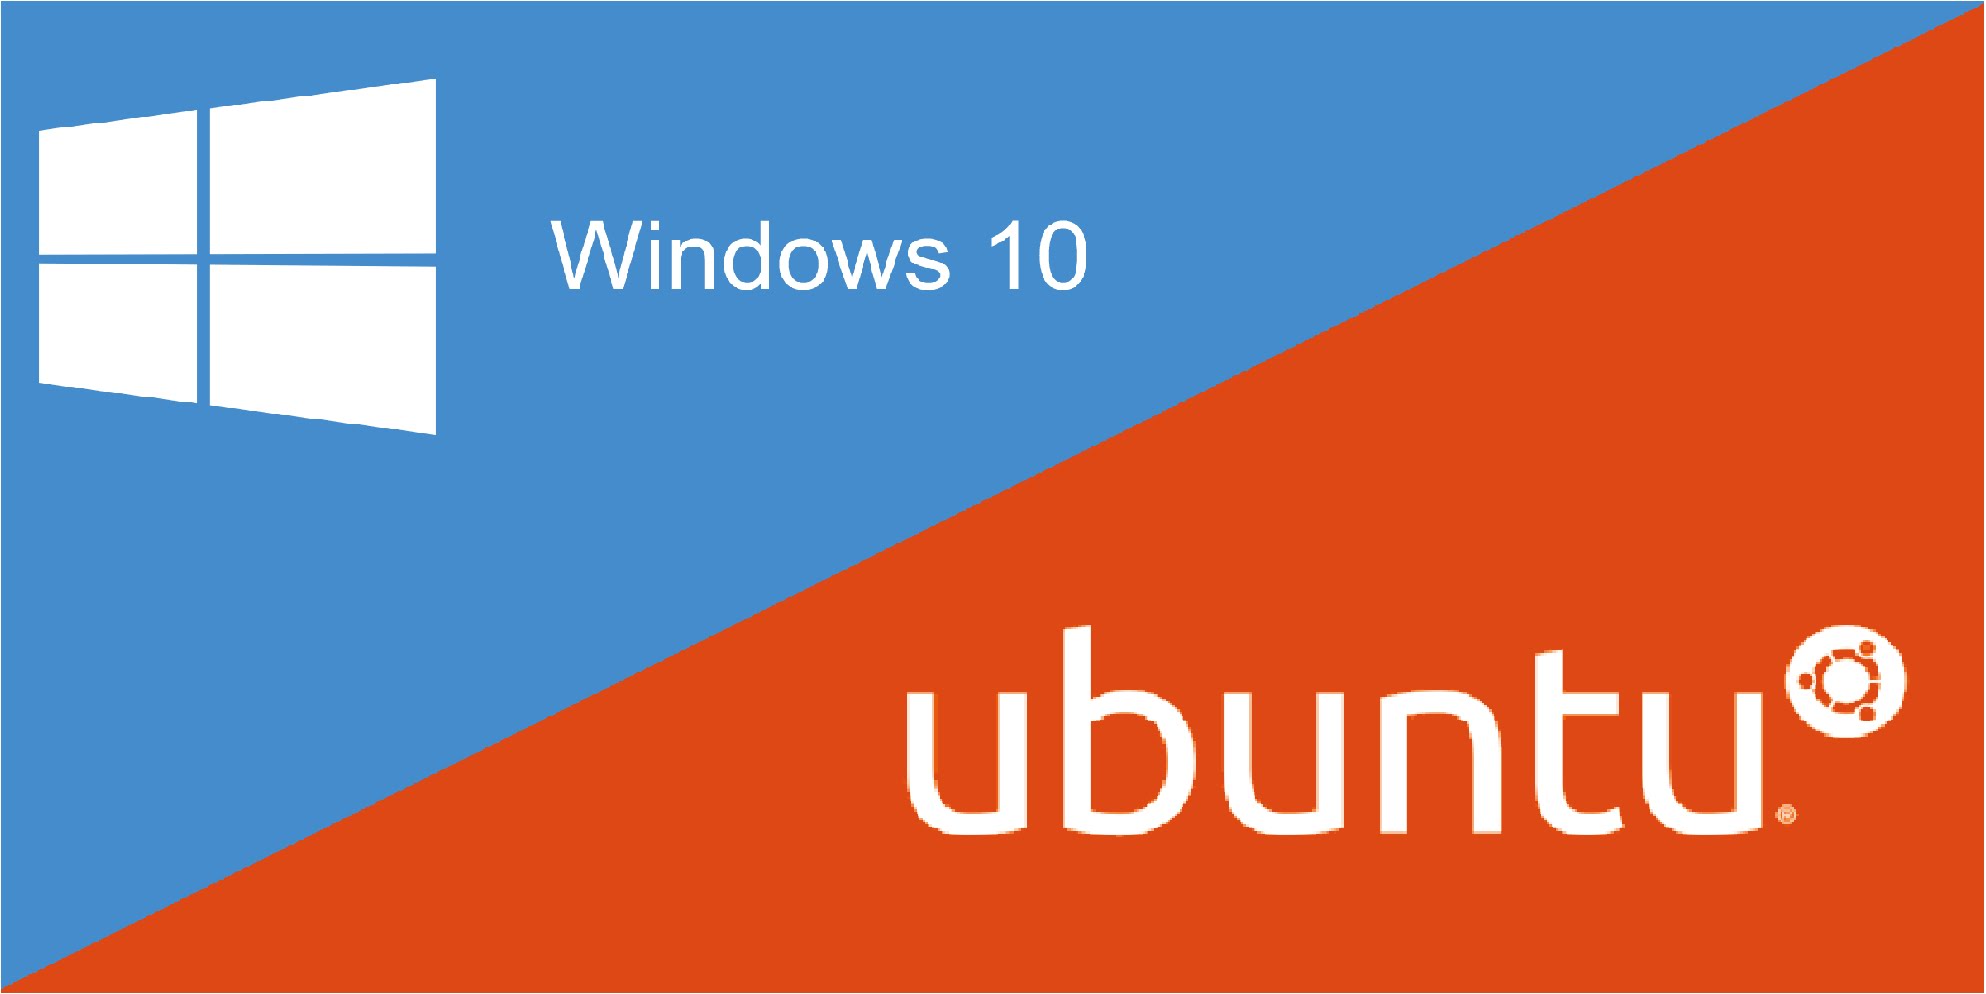 sublime text windows subsytem for linux